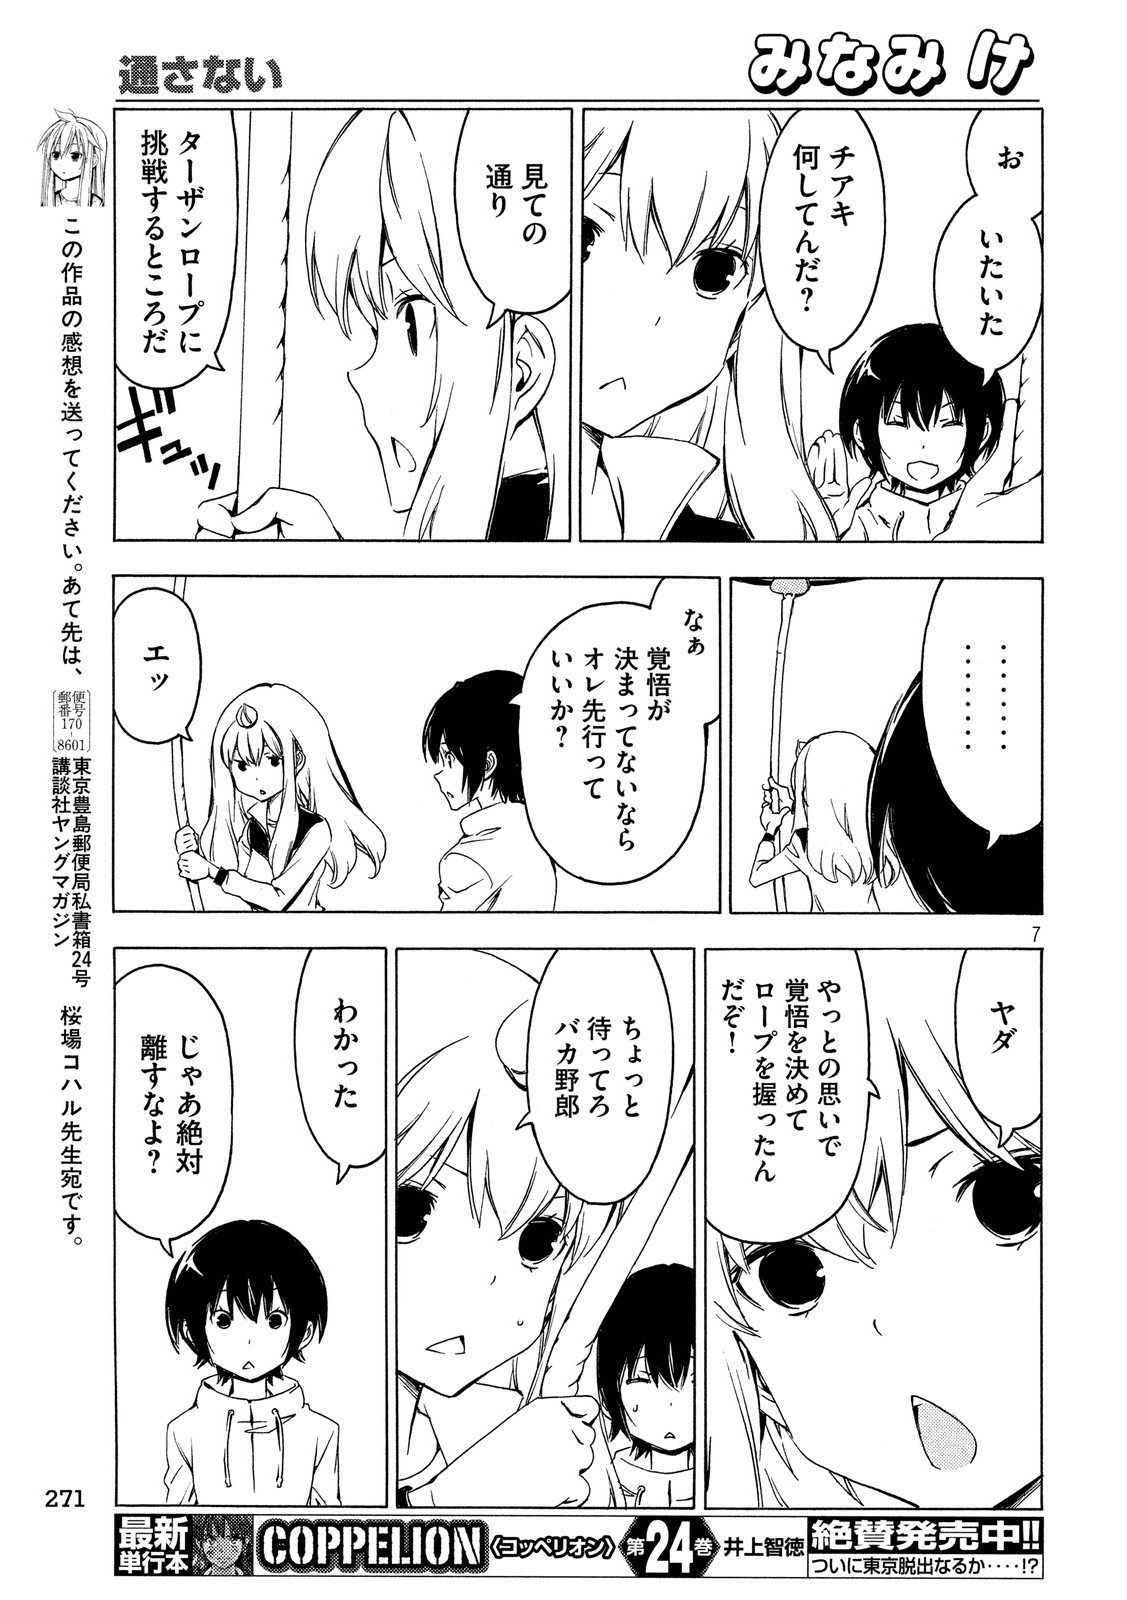 Minami-ke - Chapter 280 - Page 7